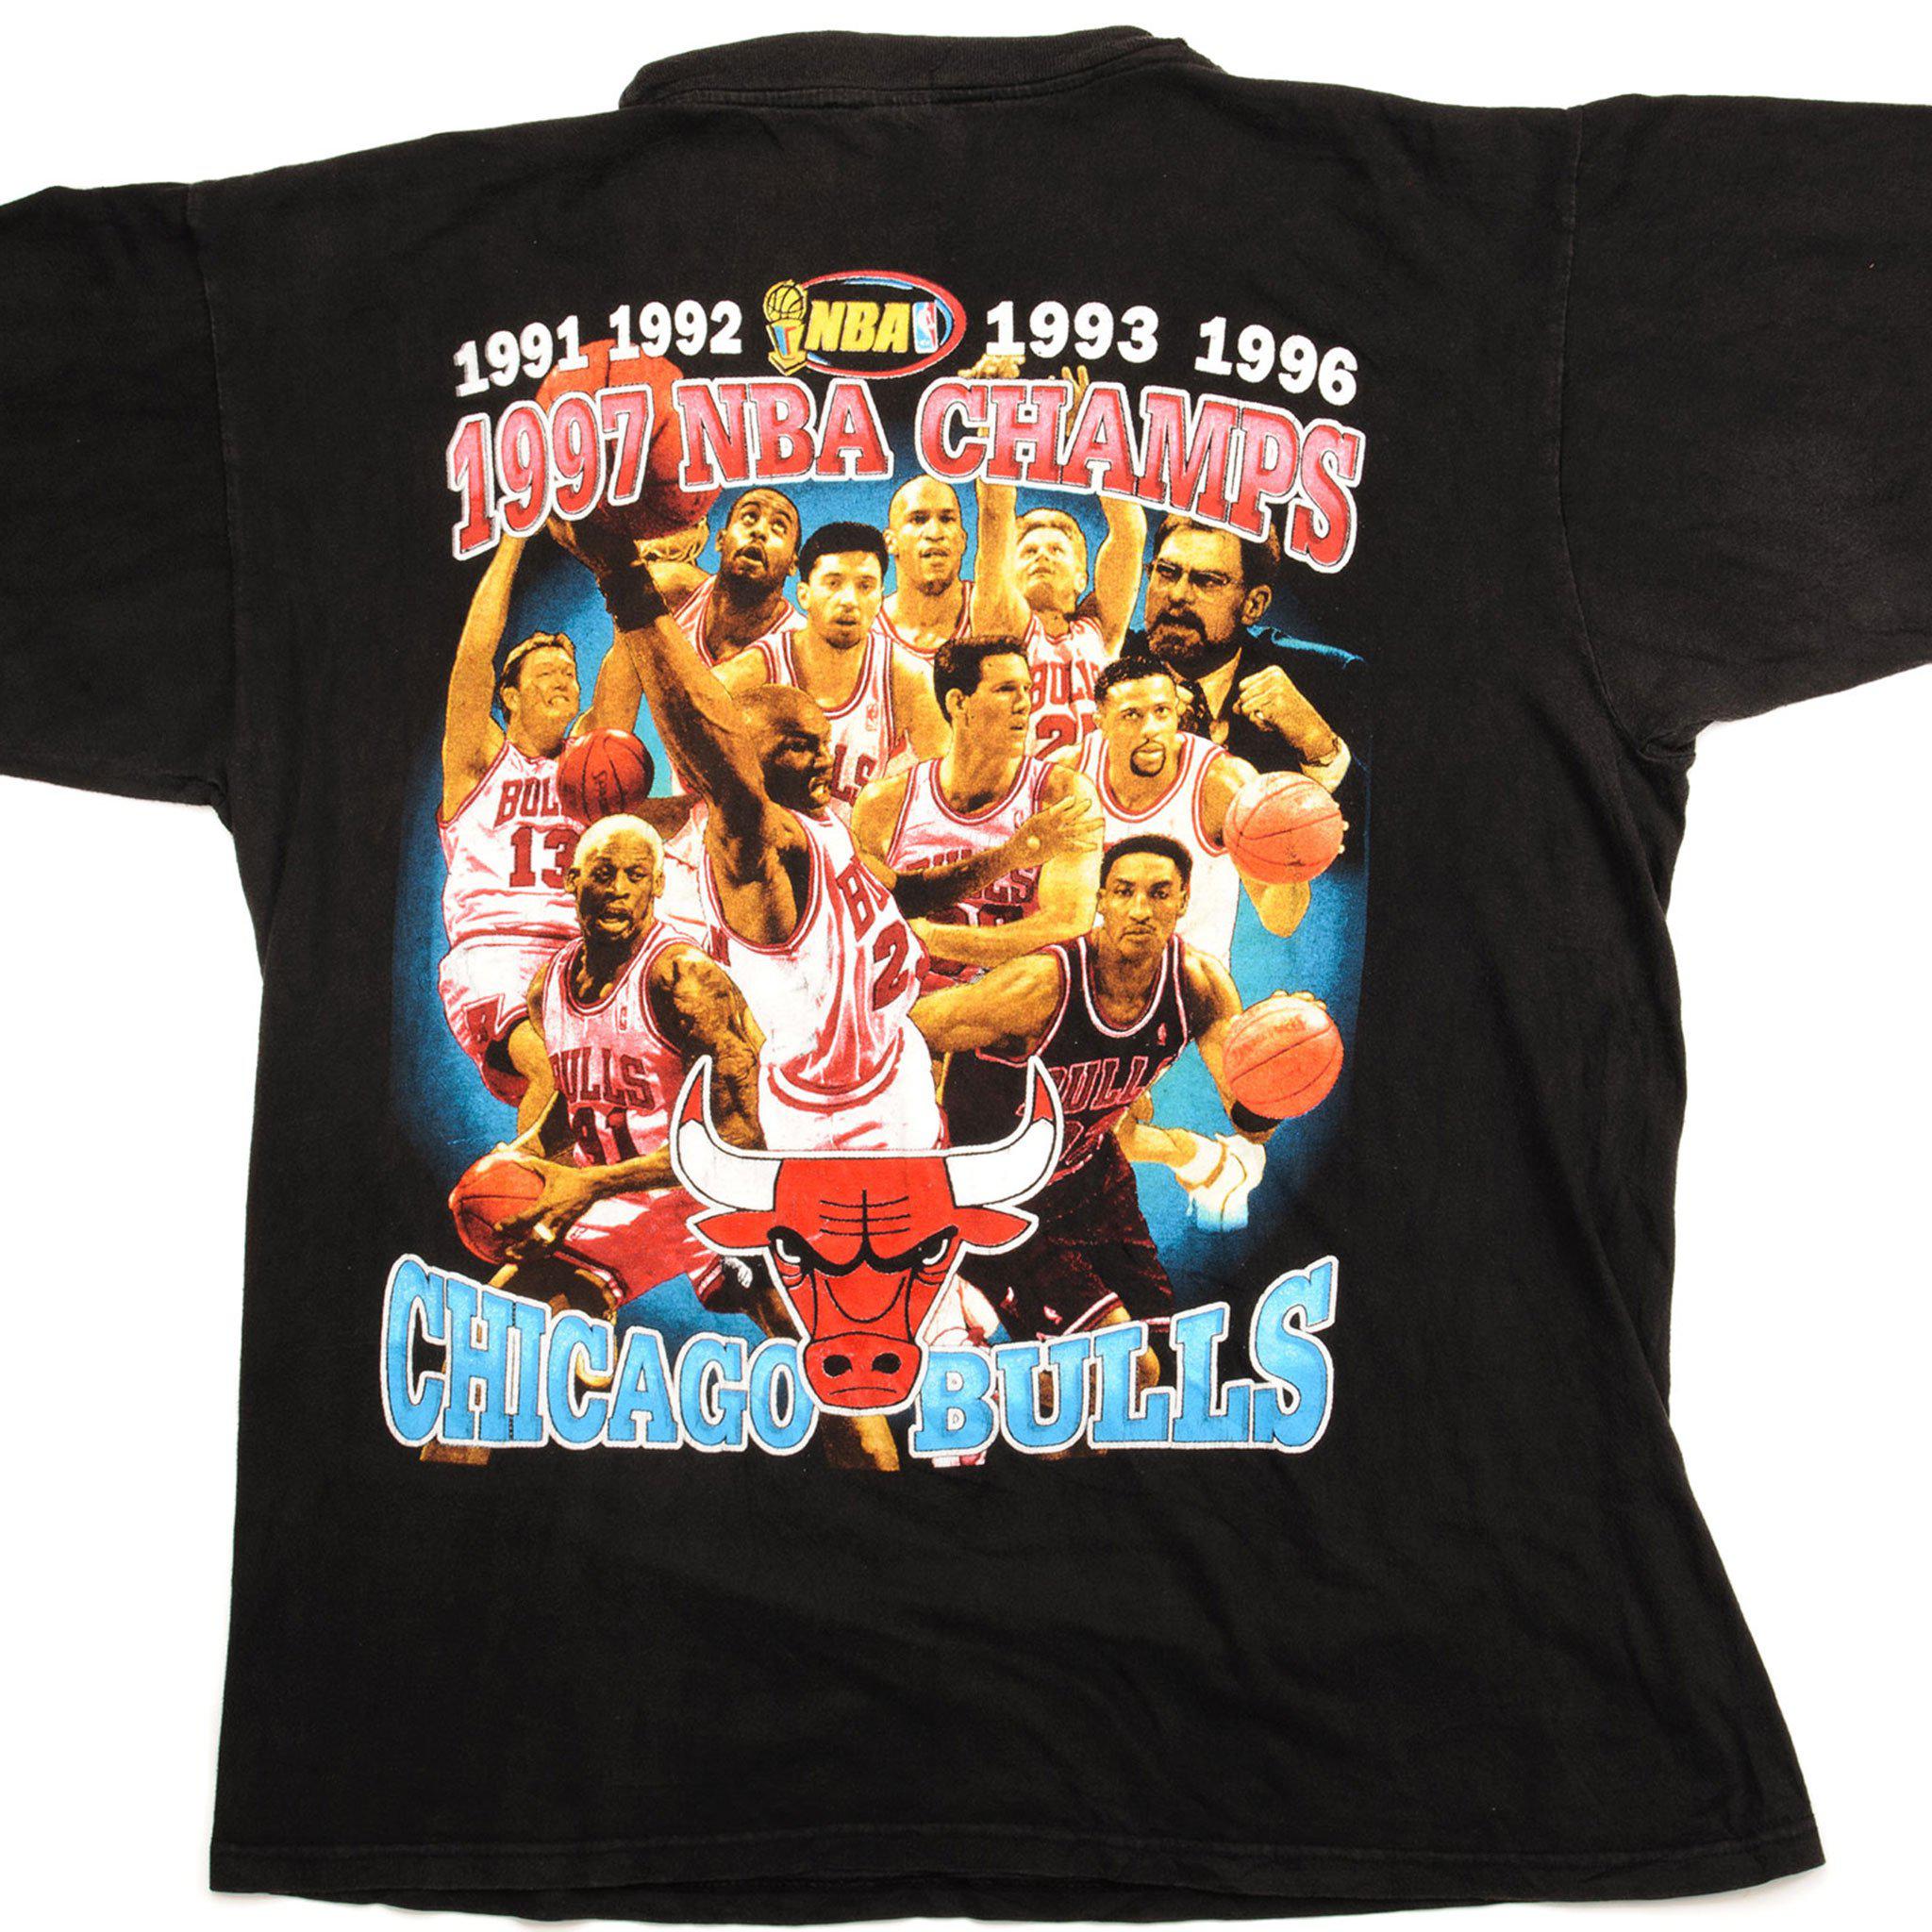 NWT Vintage Chicago Bulls 1997 NBA Champs Team T-Shirt Size XL